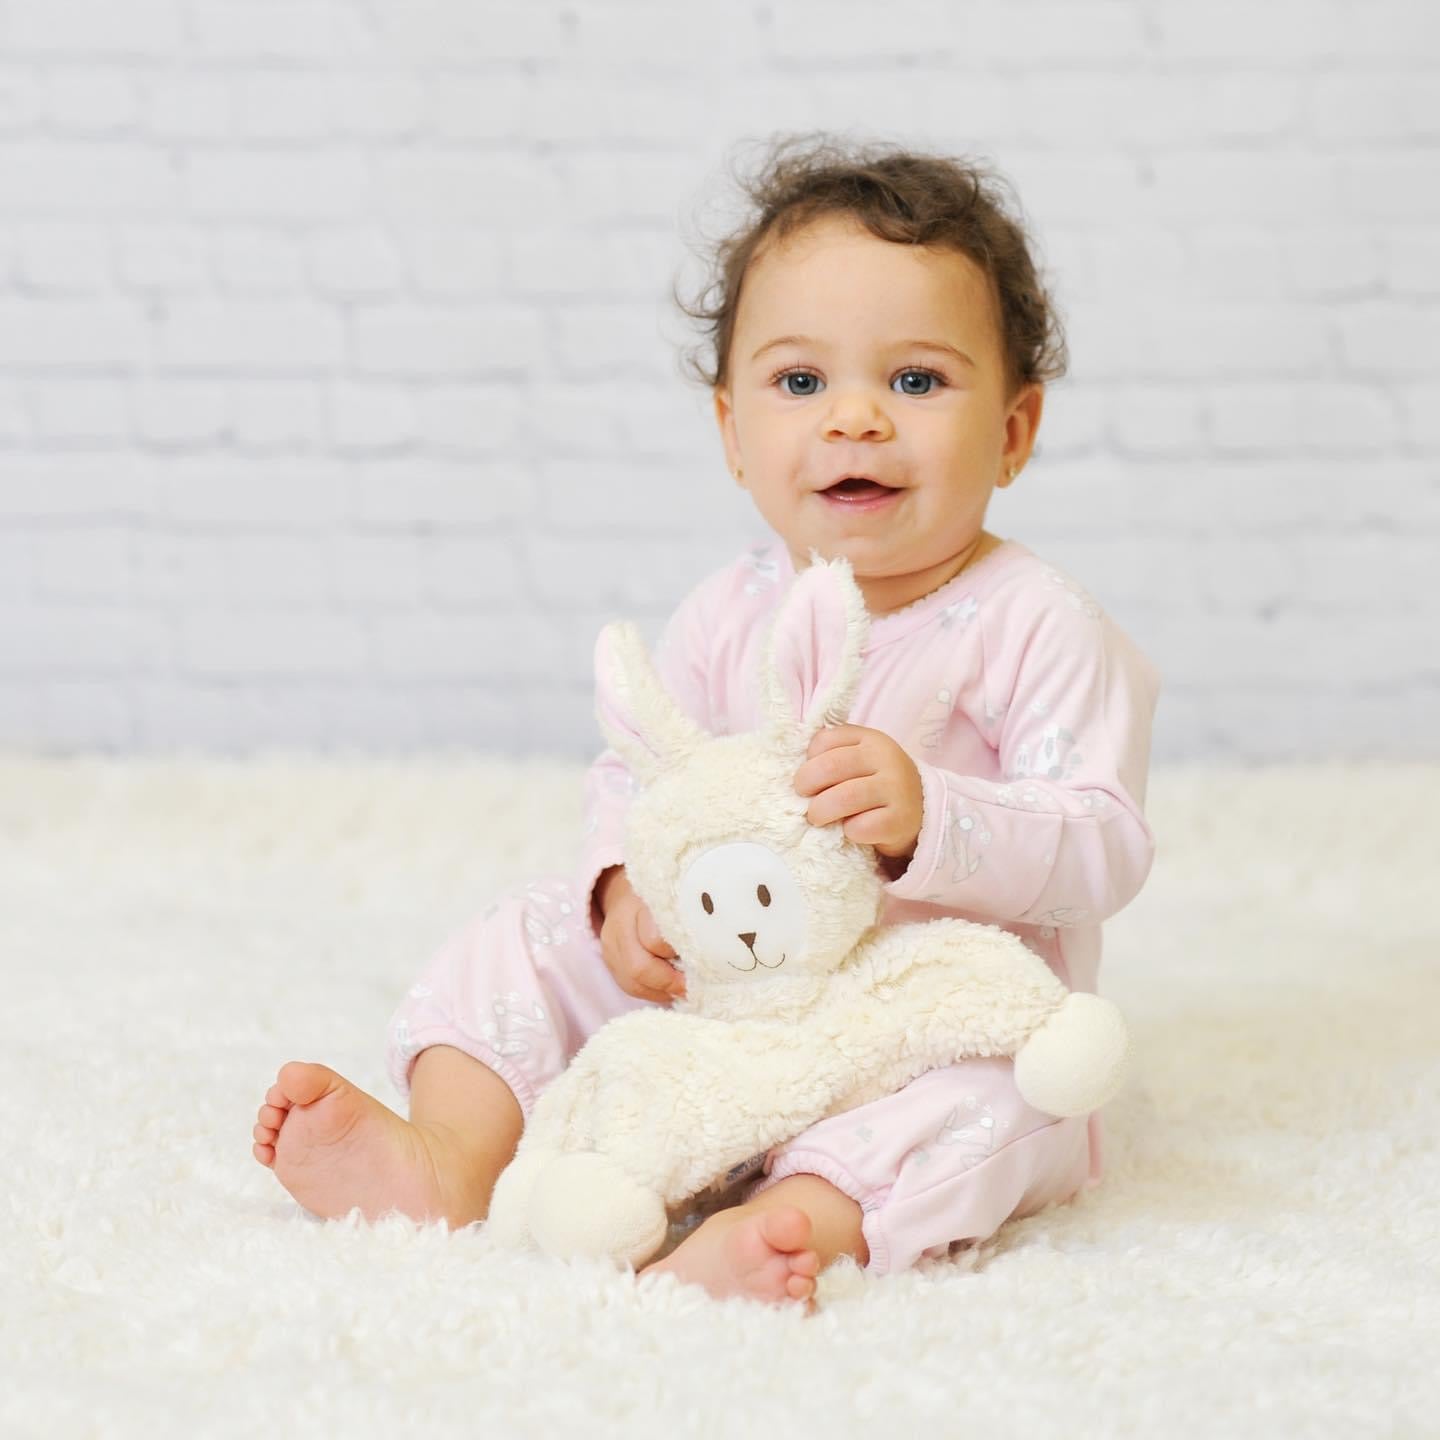 Baby holding organic bunny stuffed animal